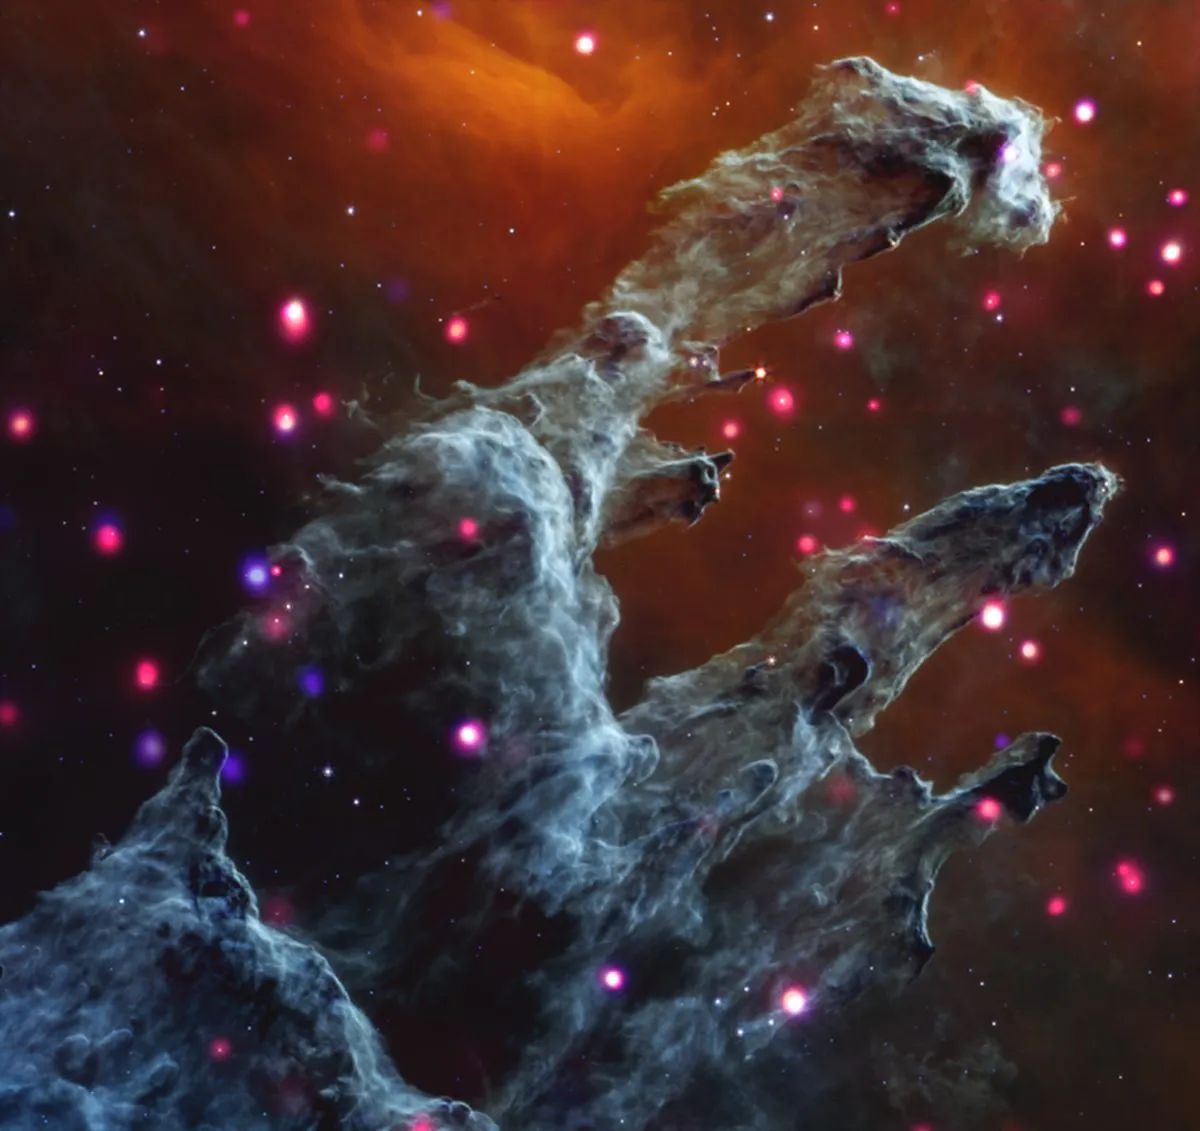 M16, the Eagle Nebula, as seen by the Chandra X-ray Observatory and the James Webb Space Telescope. Credit: Credit: X-ray: Chandra: NASA/CXC/SAO, XMM: ESA/XMM-Newton; IR: JWST: NASA/ESA/CSA/STScI, Spitzer: NASA/JPL-Caltech; Optical: Hubble: NASA/ESA/STScI, ESO. Image Processing: L. Frattare, J. Major, and K. Arcand.